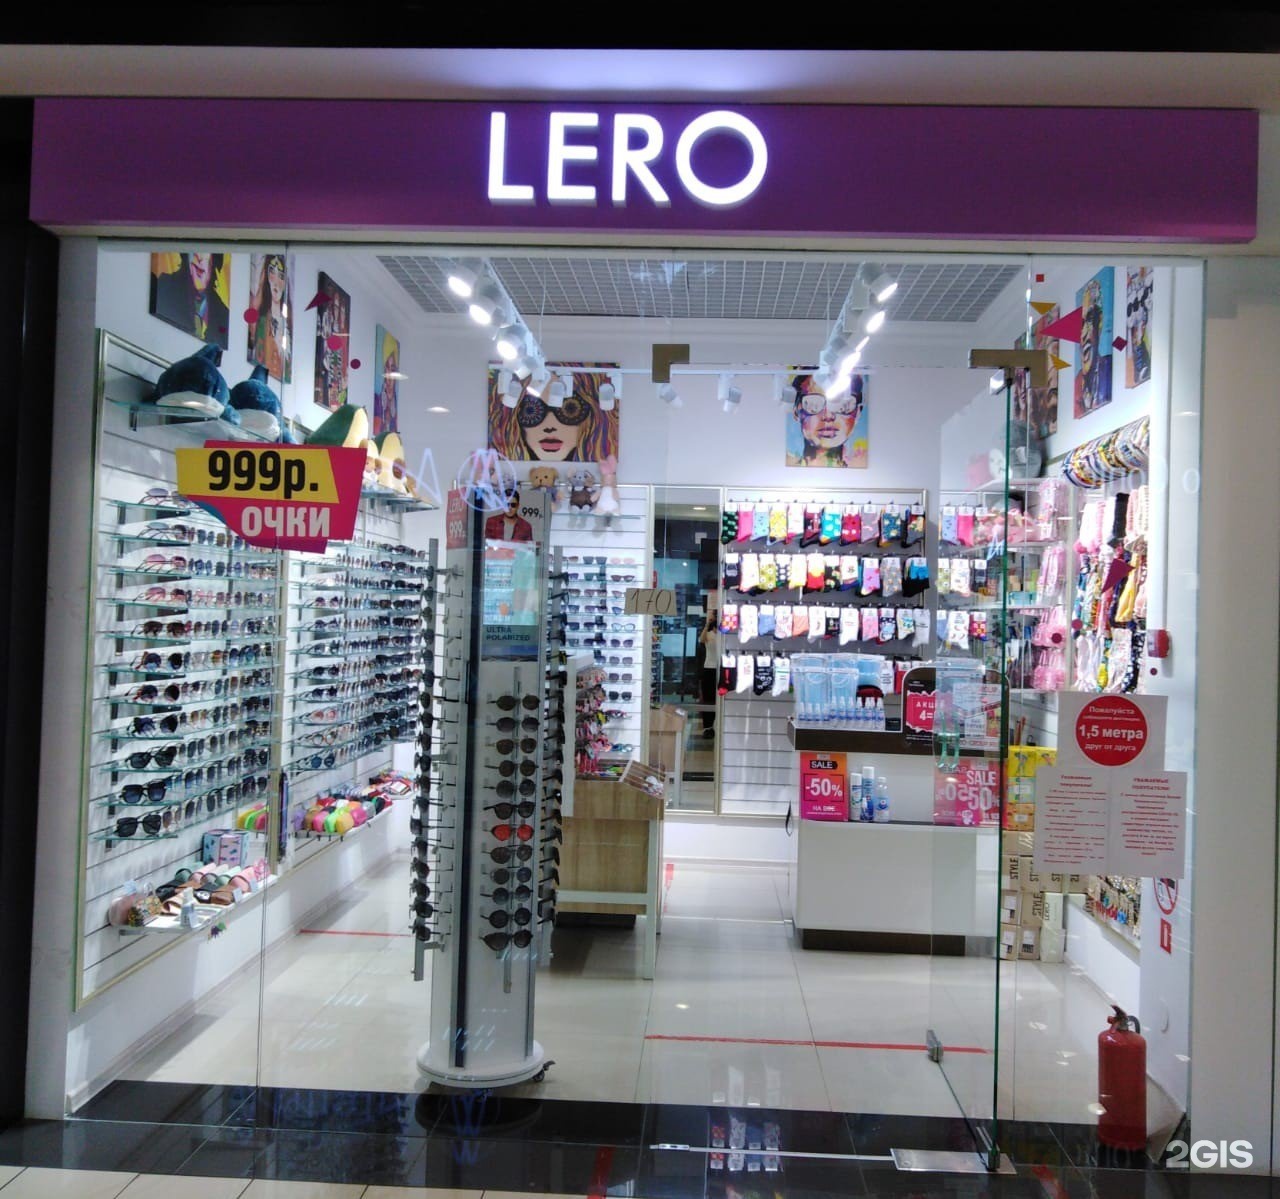 Очки леро. Lero магазин. Магазин Lero Accessories. Леро аксессуары. Lero Accessories для очков.